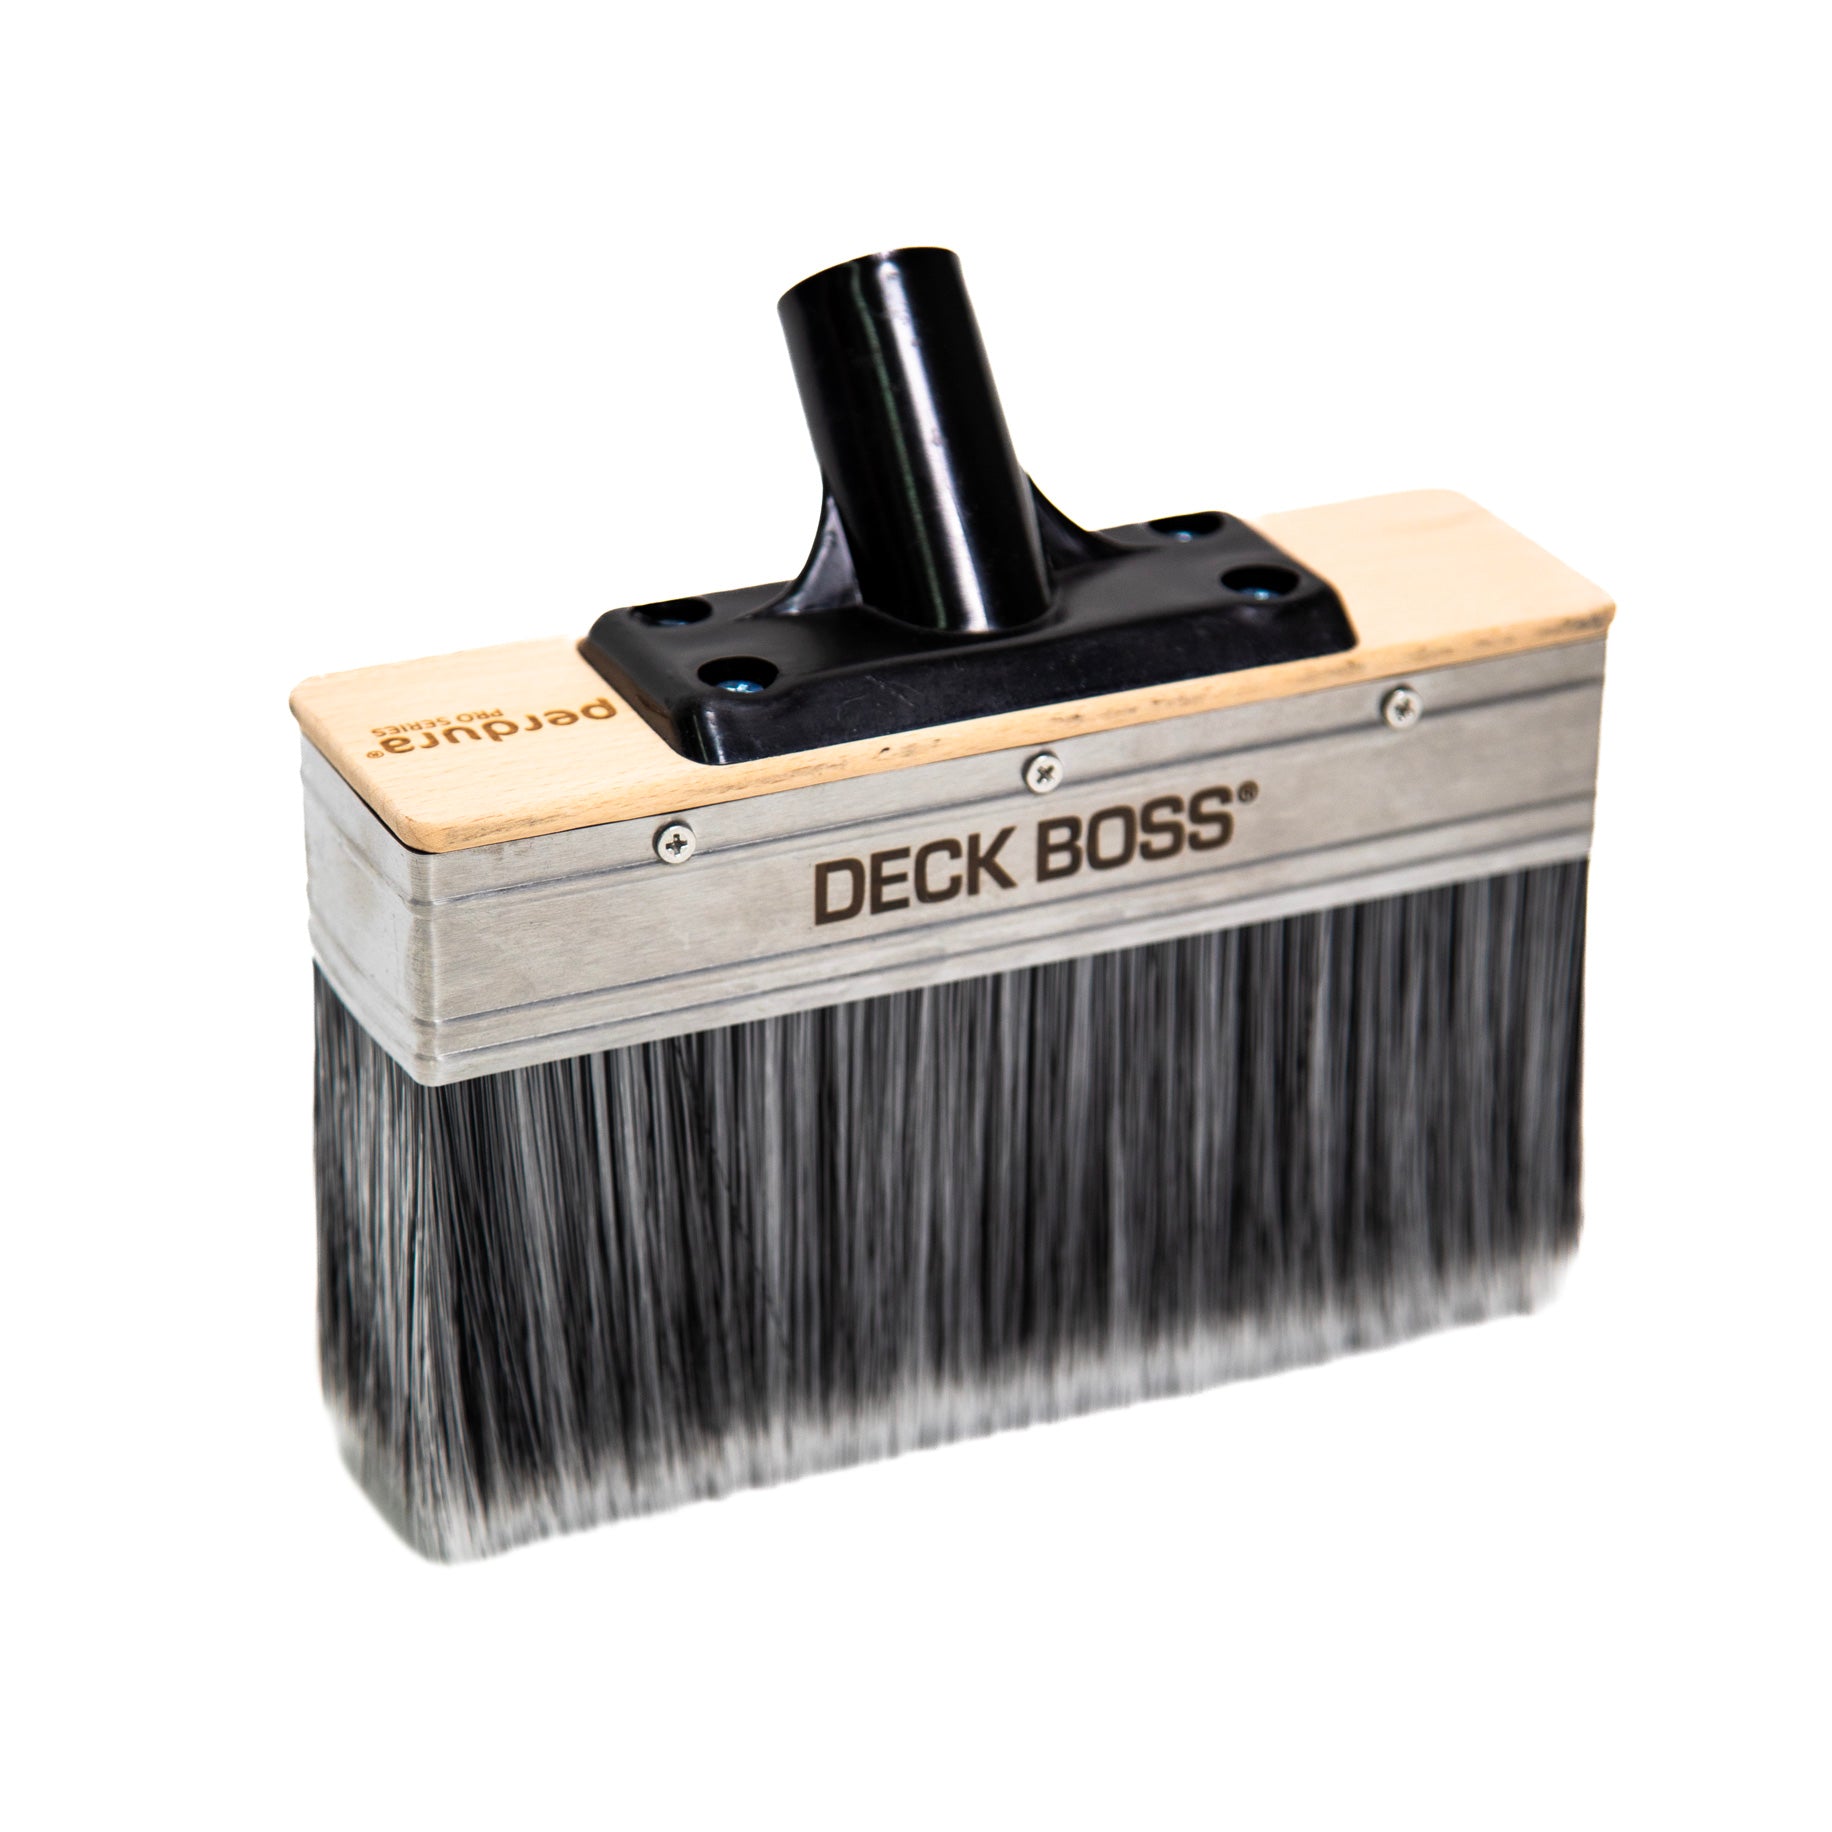 Perdura DECK BOSS Deck Stain Brush